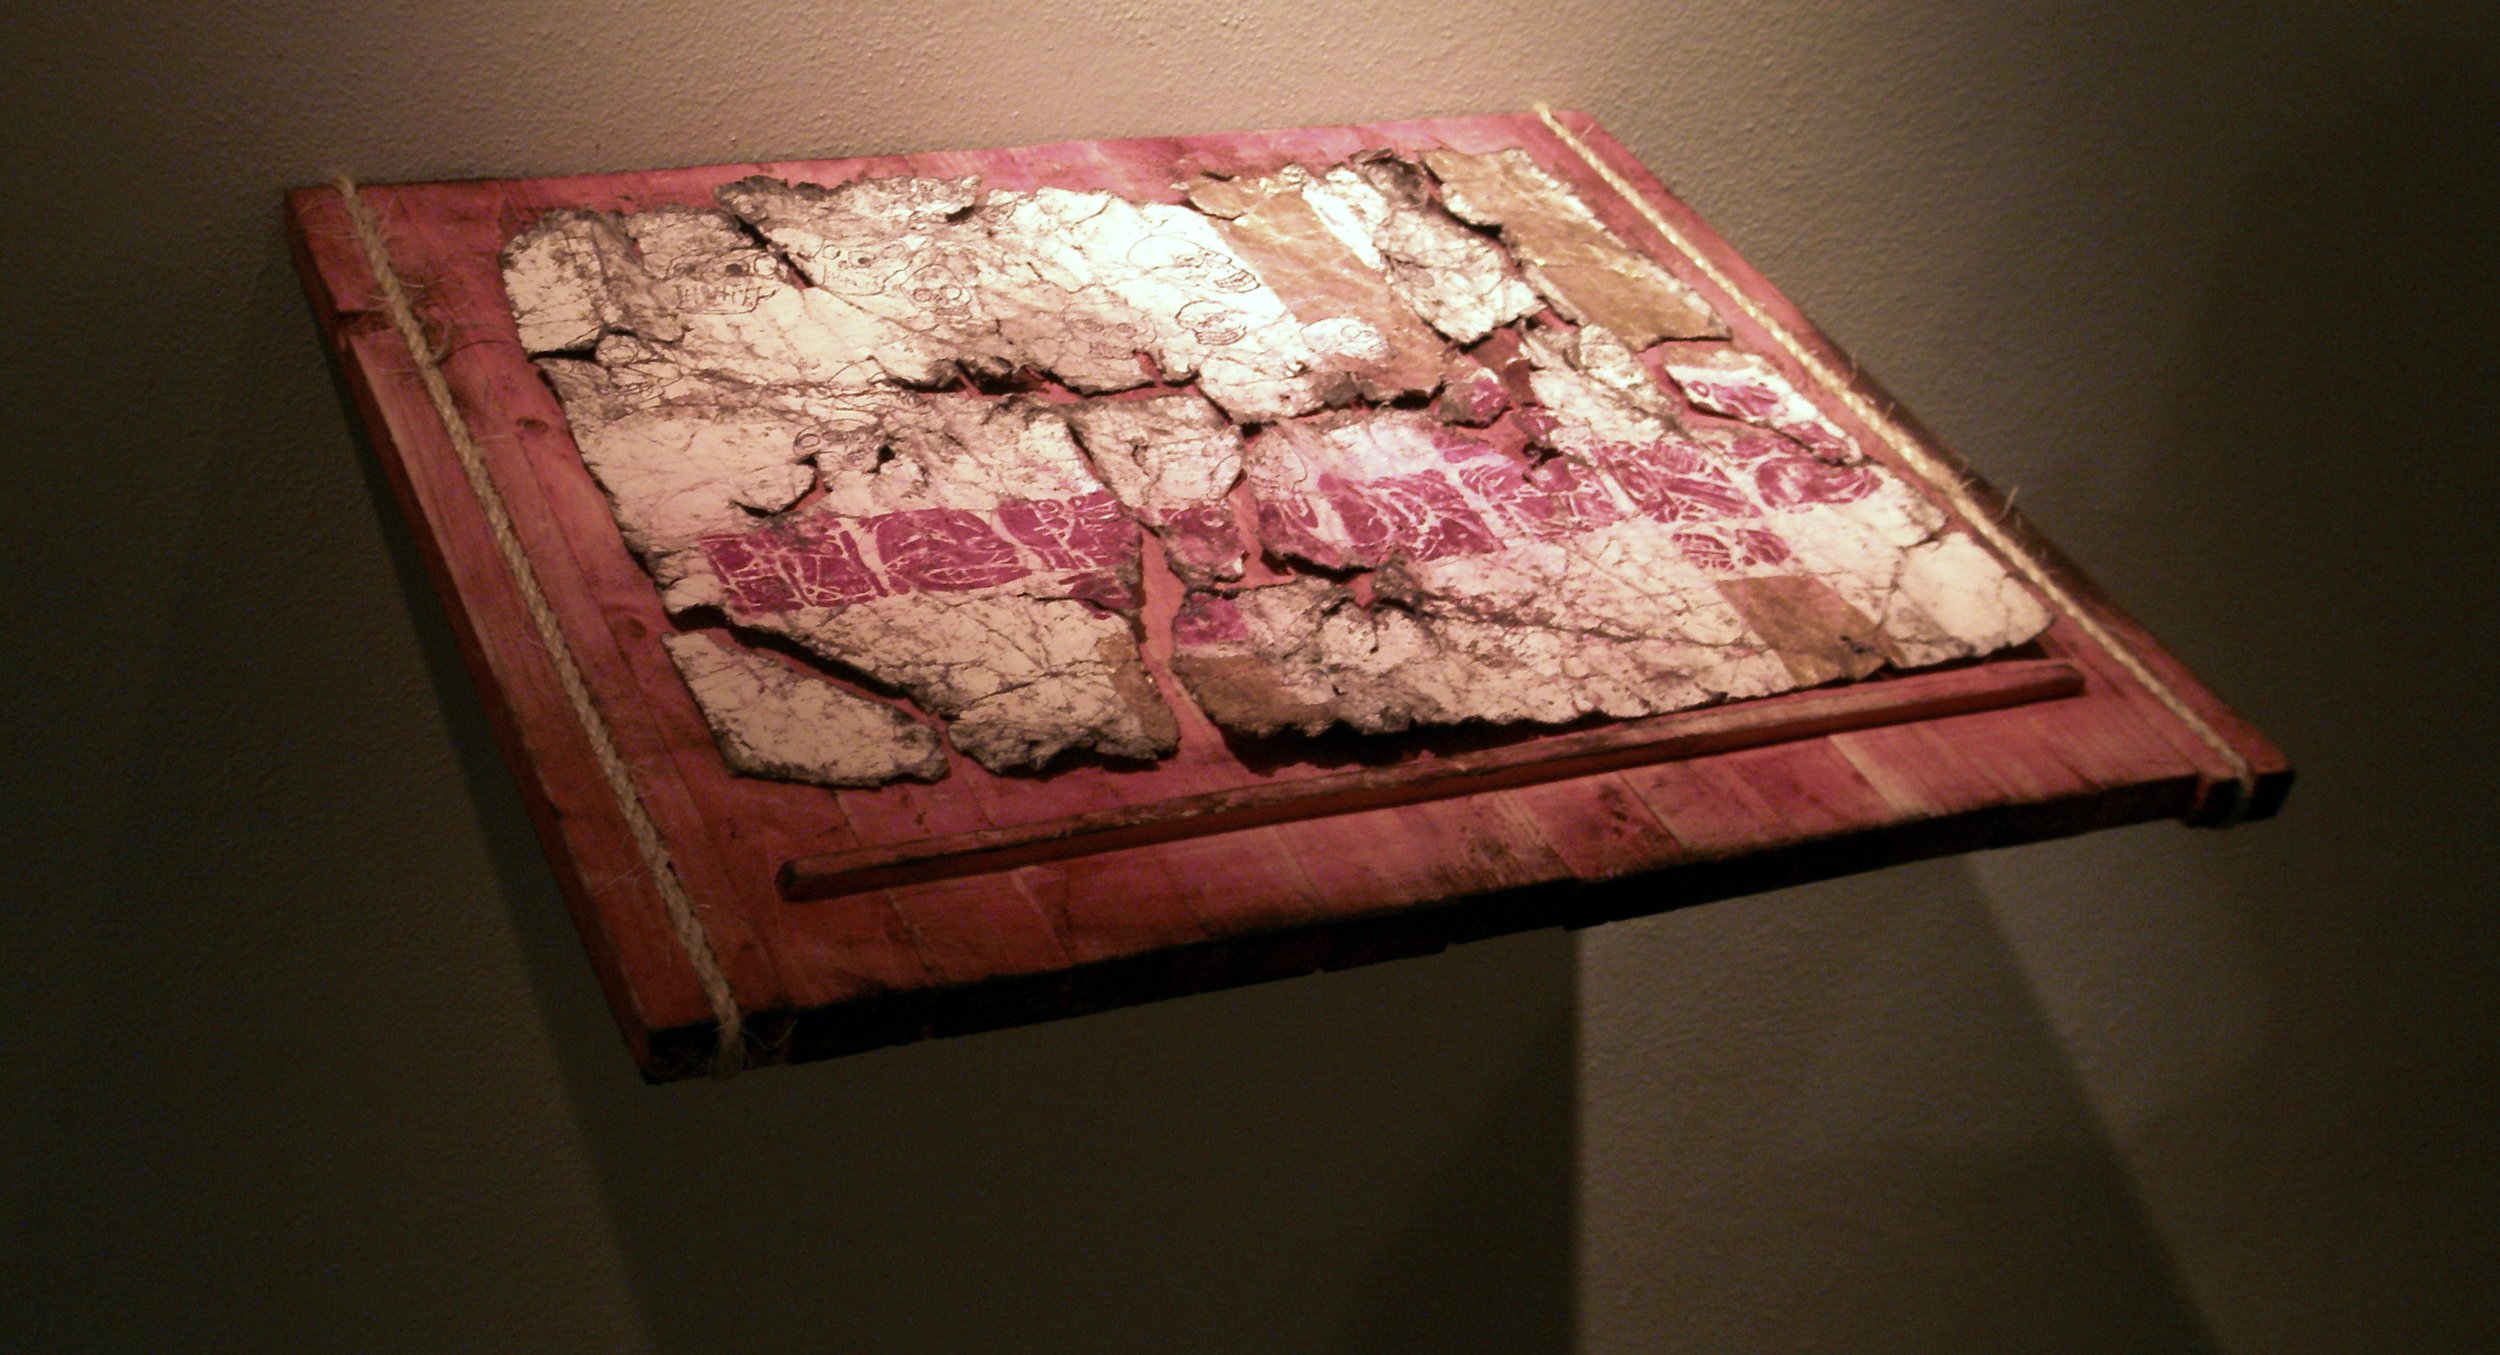   Crystal Skulls  linocut, ink, gold leaf, fire, soil, hemp on paper, wood. 2008  exhibited -  Imago Gallery during 2012 2008  